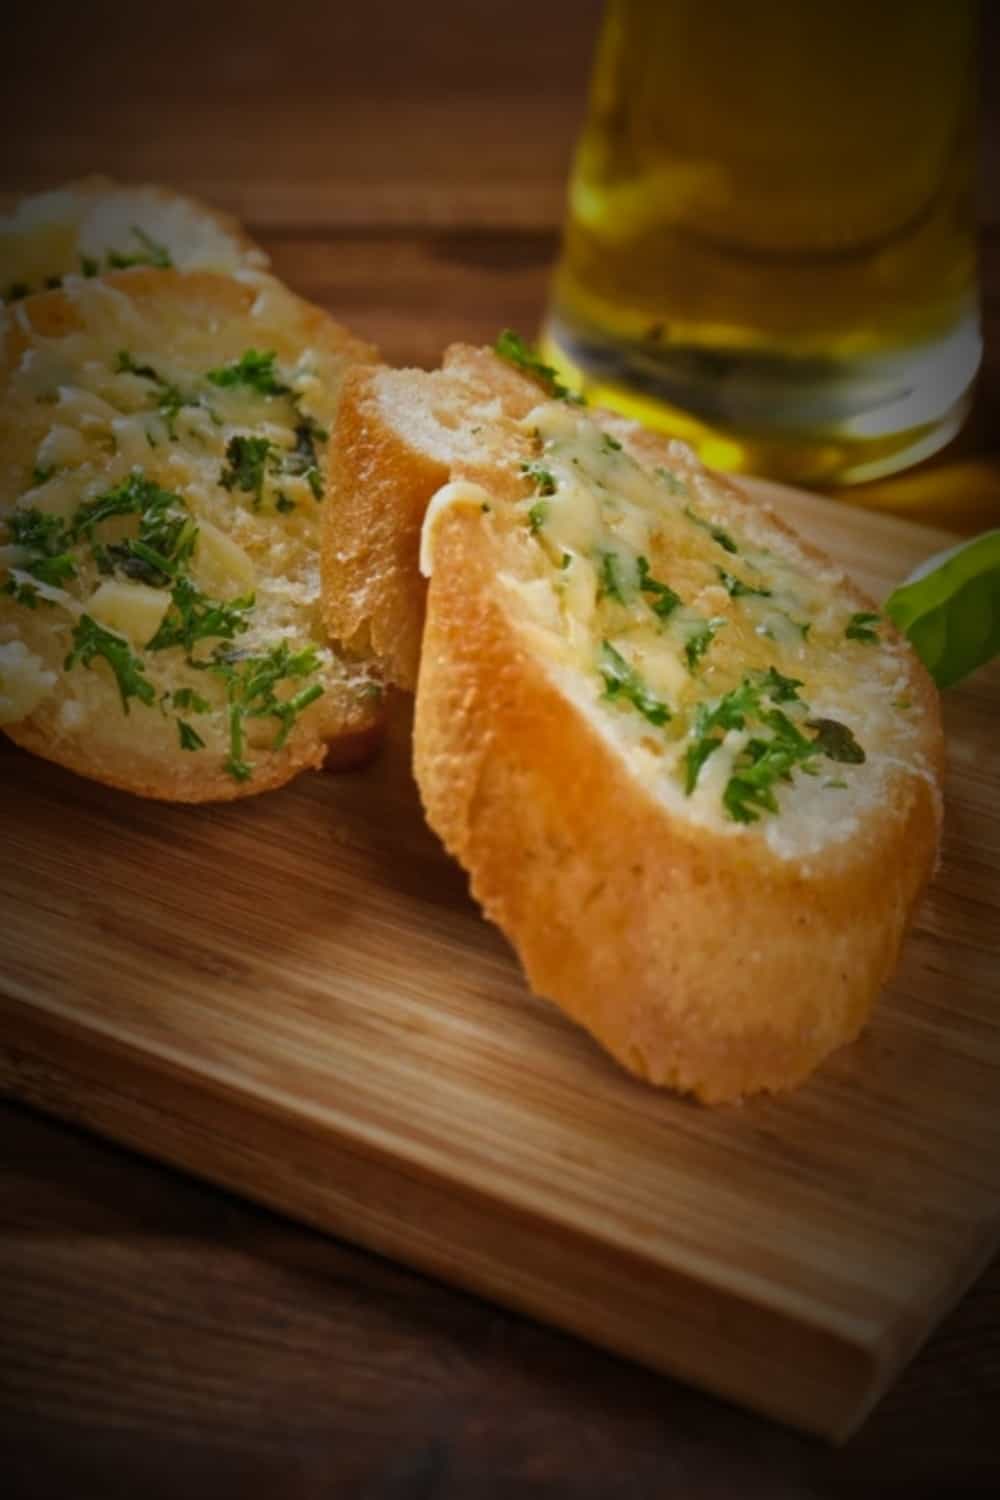 Benihana Garlic Butter on slices of bread.
